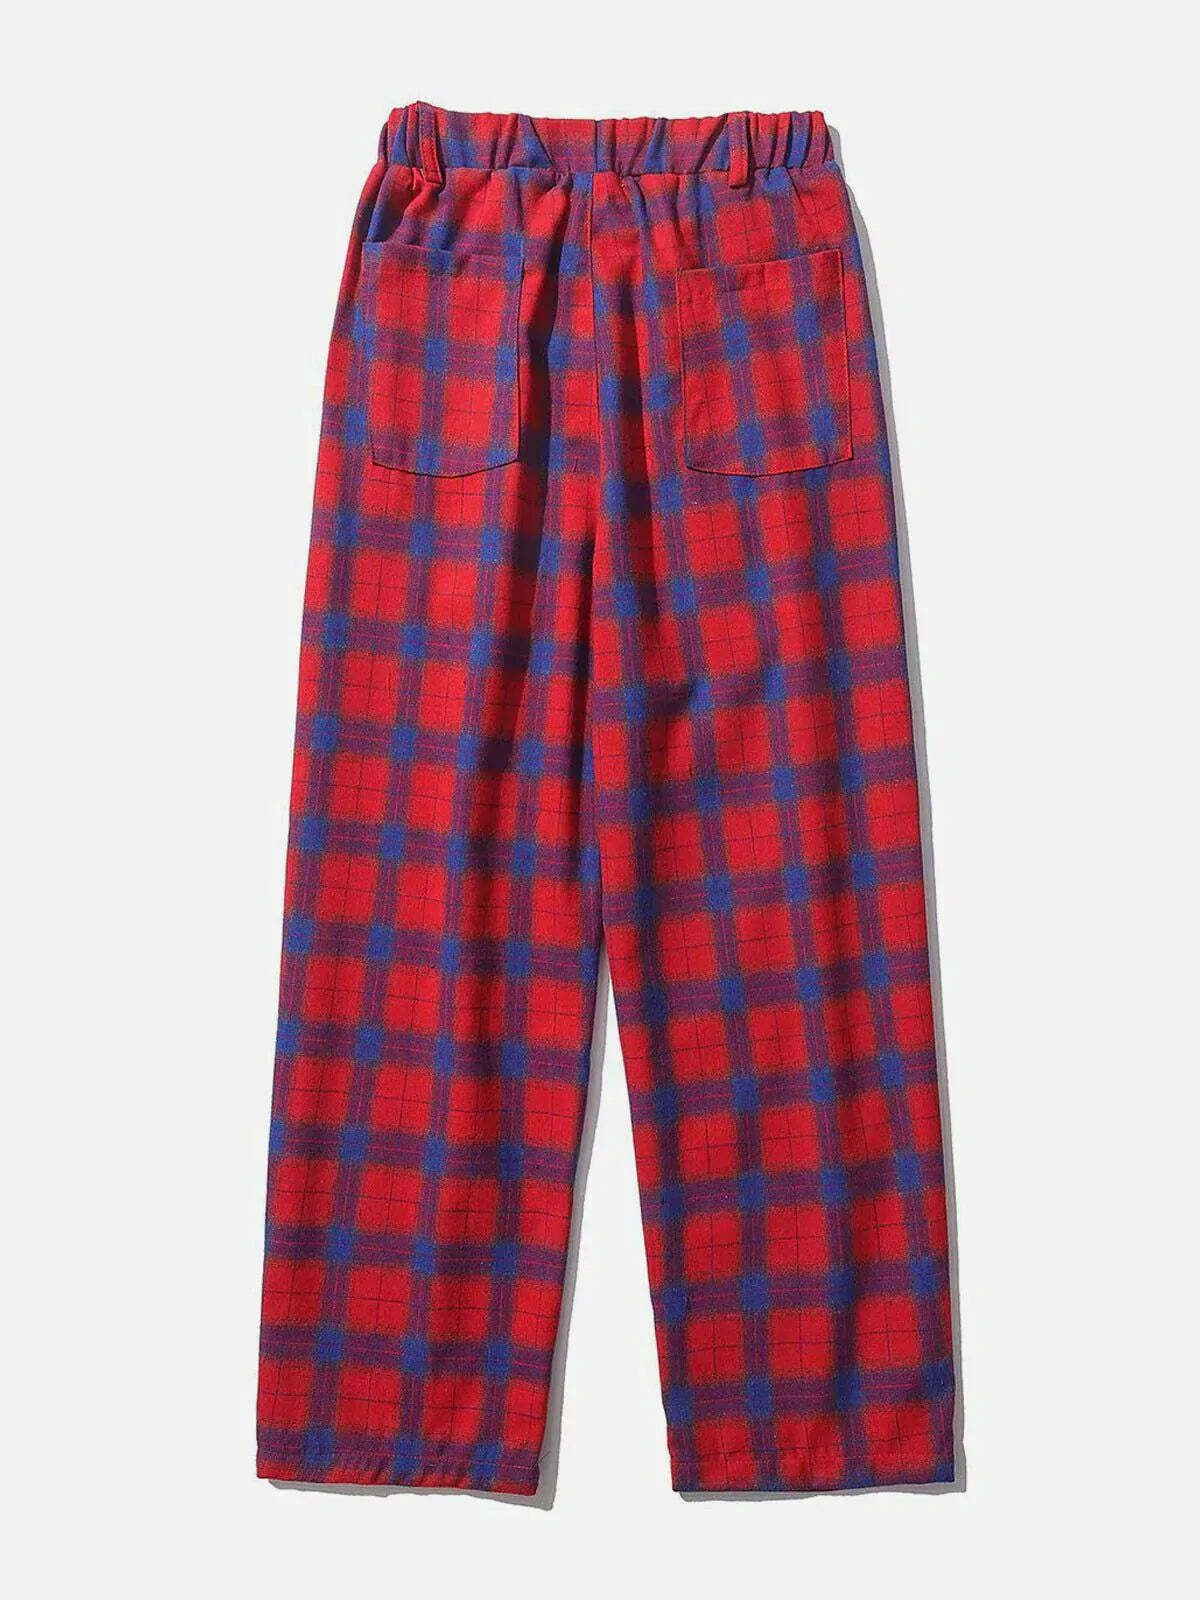 plaid pattern casual pants retro & vibrant streetwear 7033